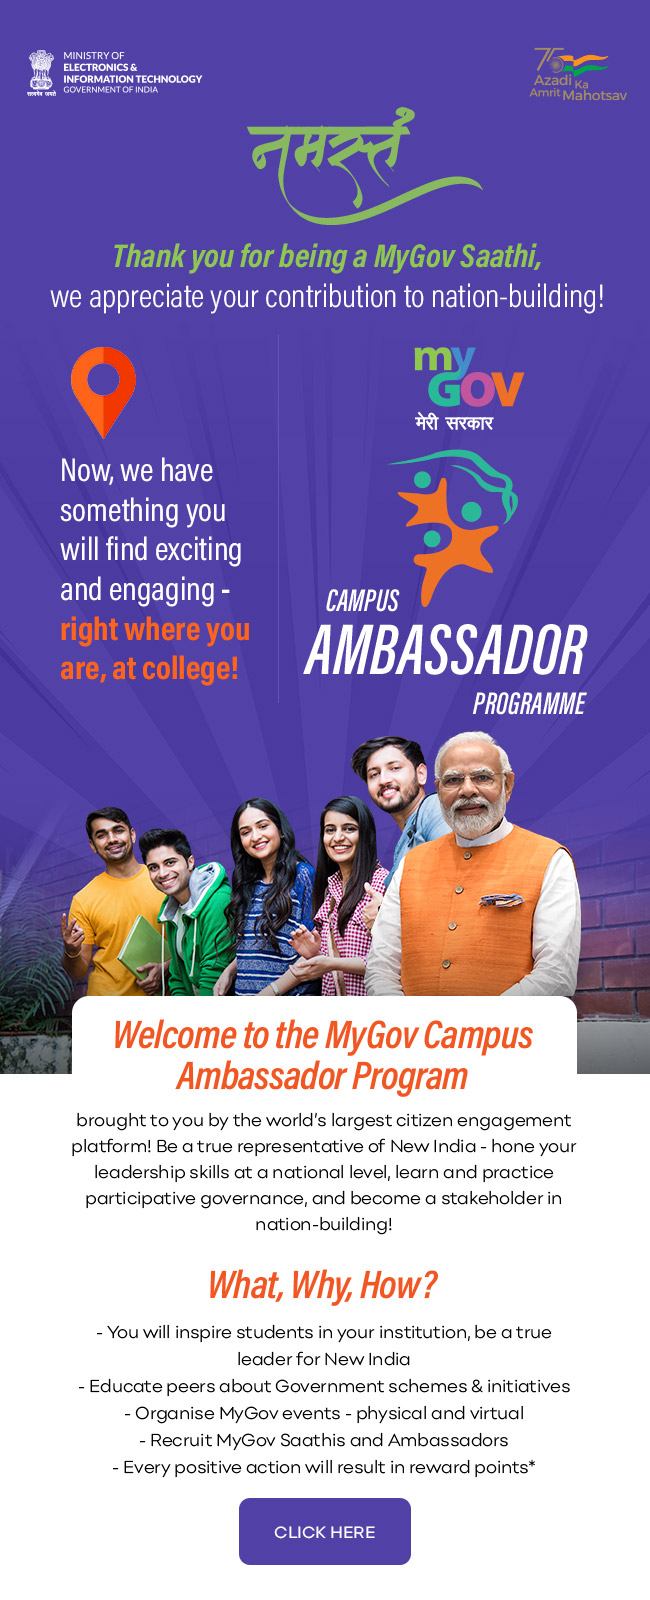 to the MyGov Campus Ambassador Program